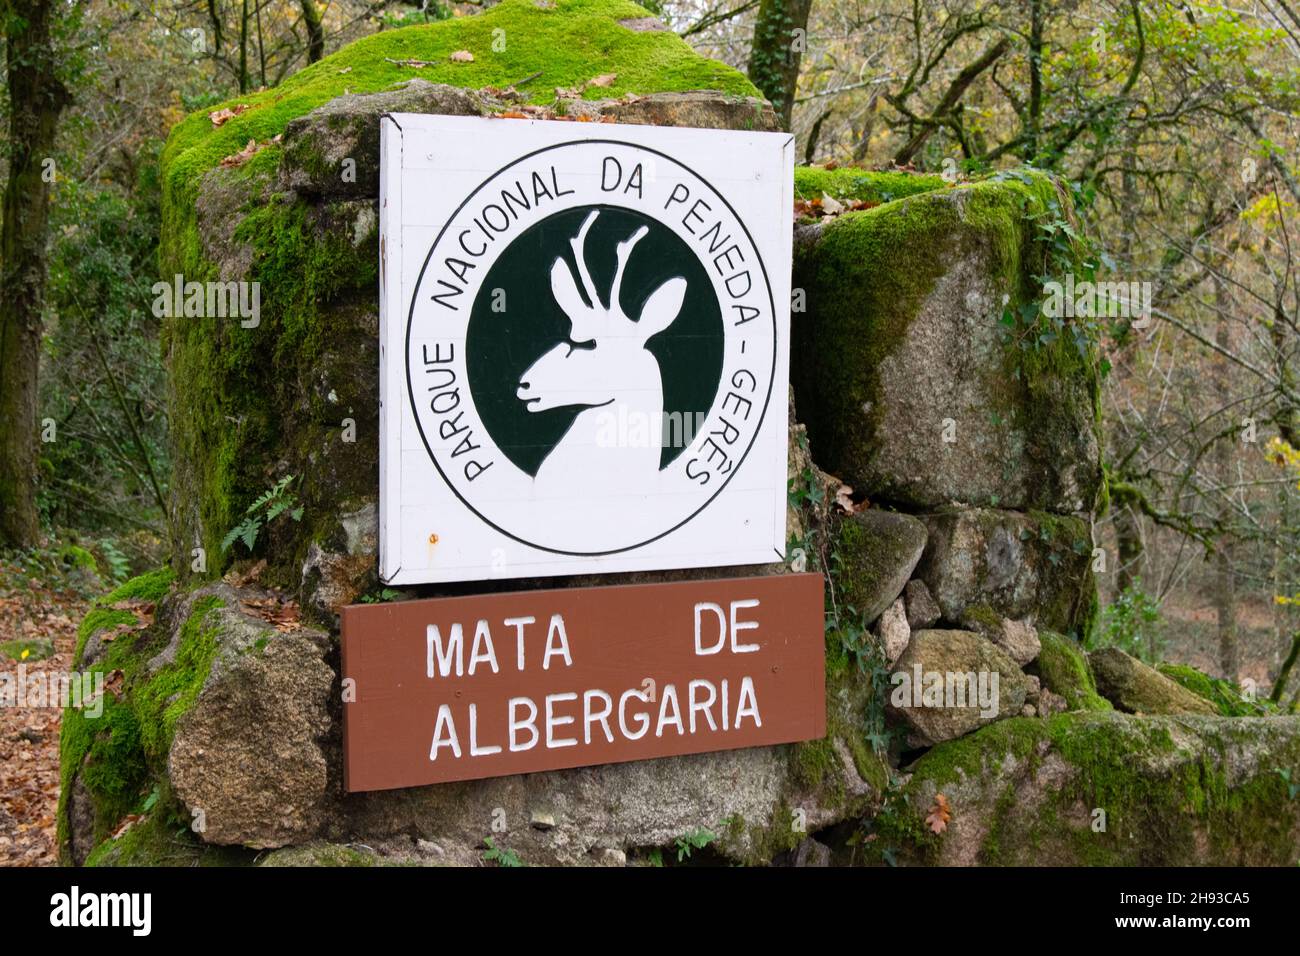 Mata de Albergaria sign and logo. National park Peneda Gerês. Stock Photo